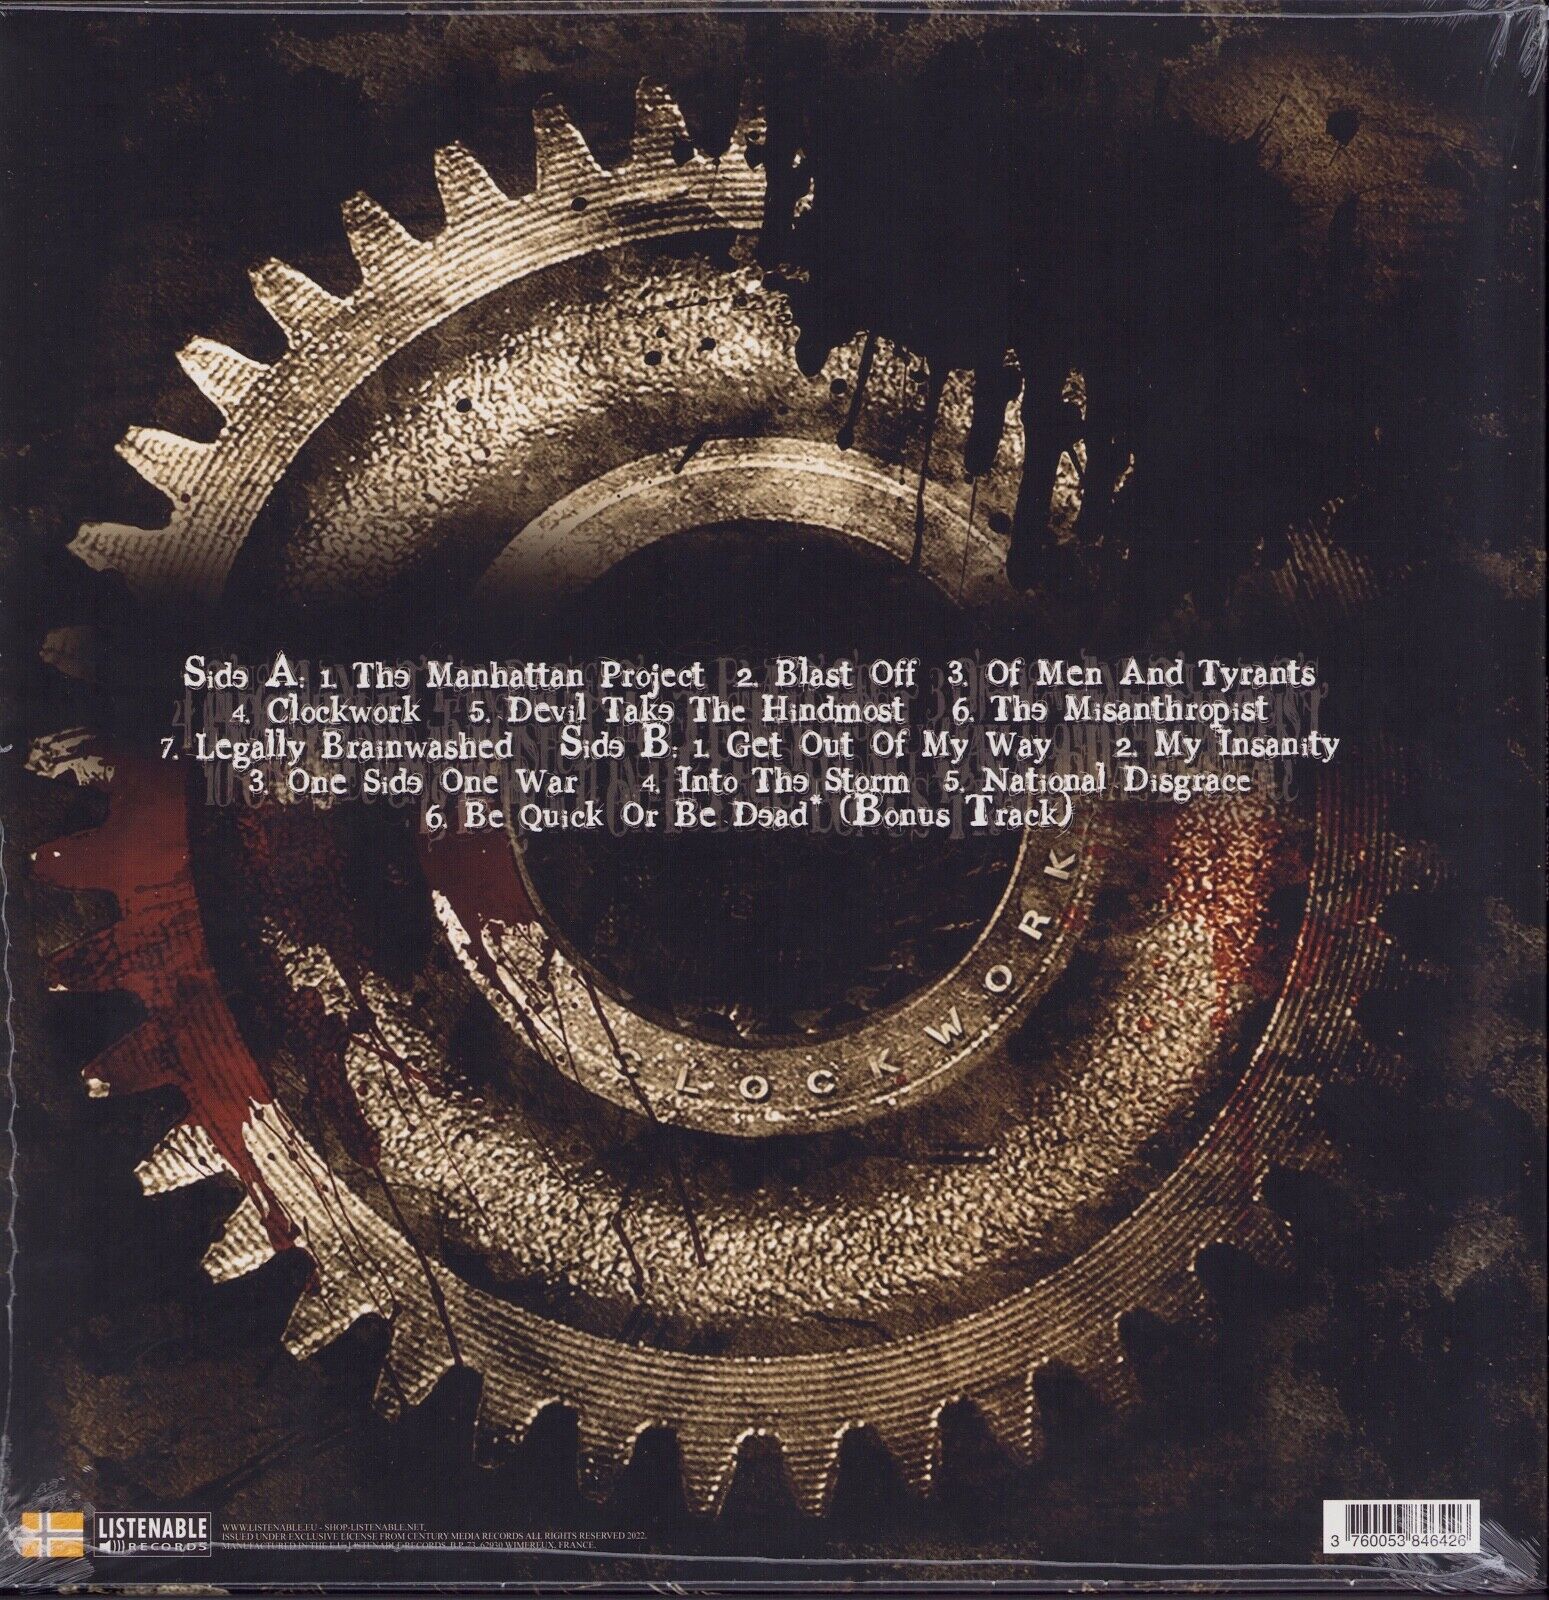 Angelus Apatrida - Clockwork Transparent Red Vinyl LP Limited Edition